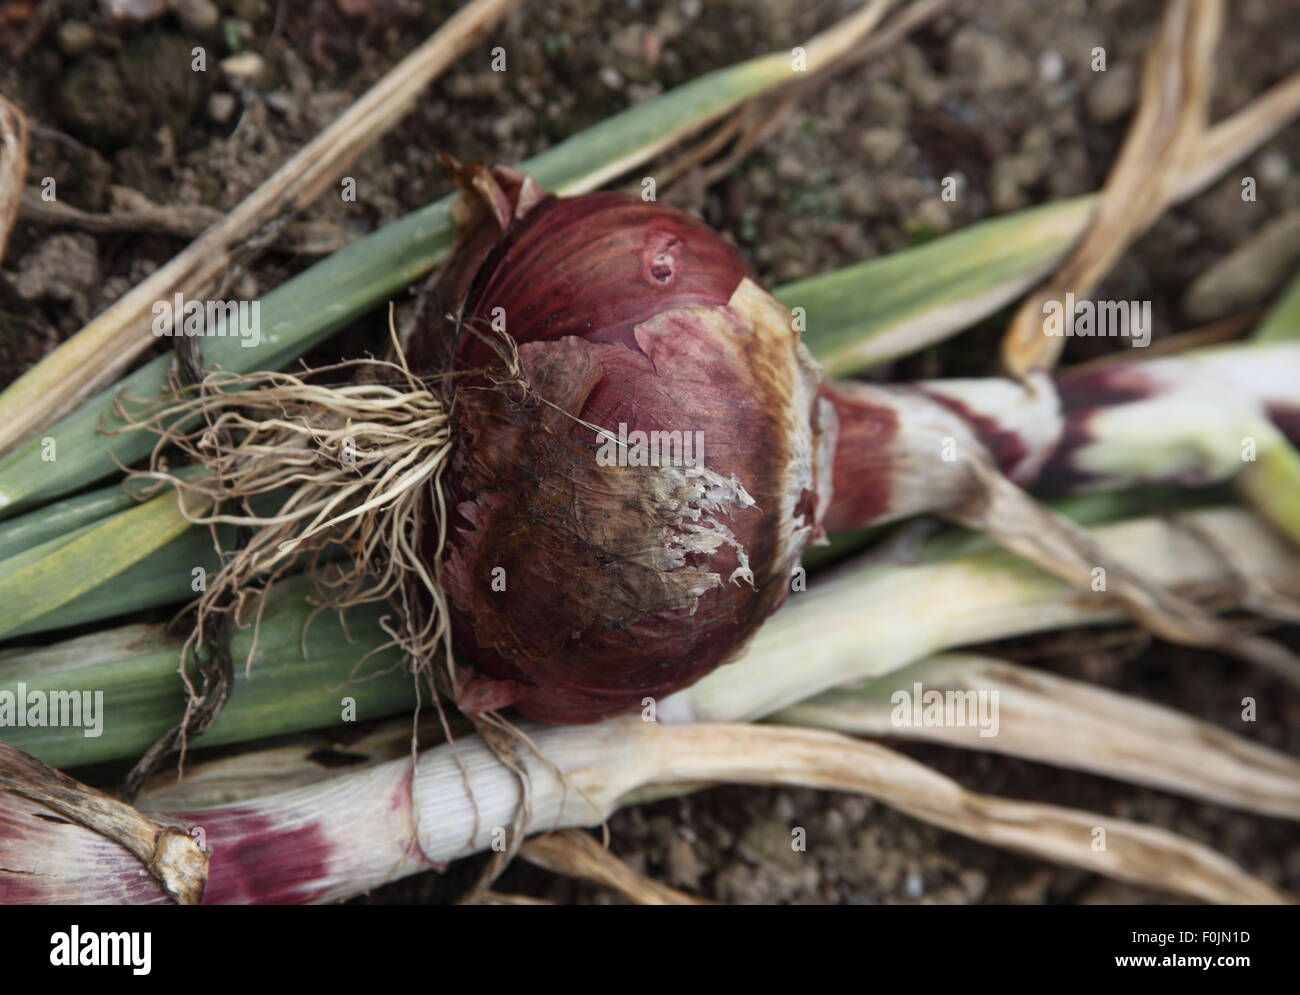 Allium 'Karmen' Onion close of mature bulb Stock Photo - Alamy